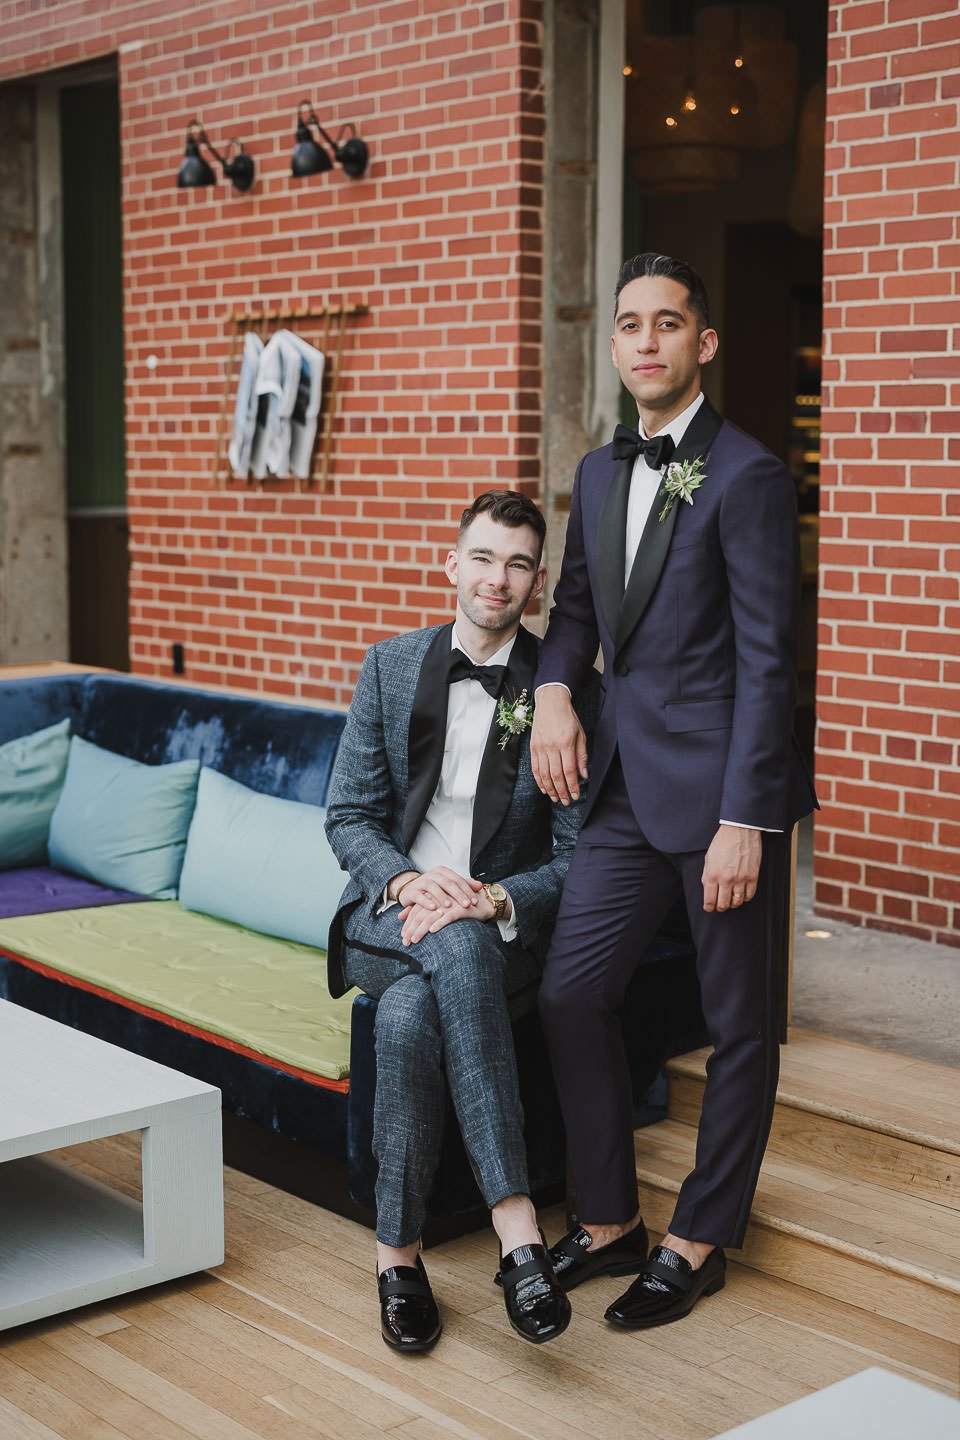 Two grooms wedding photo posing